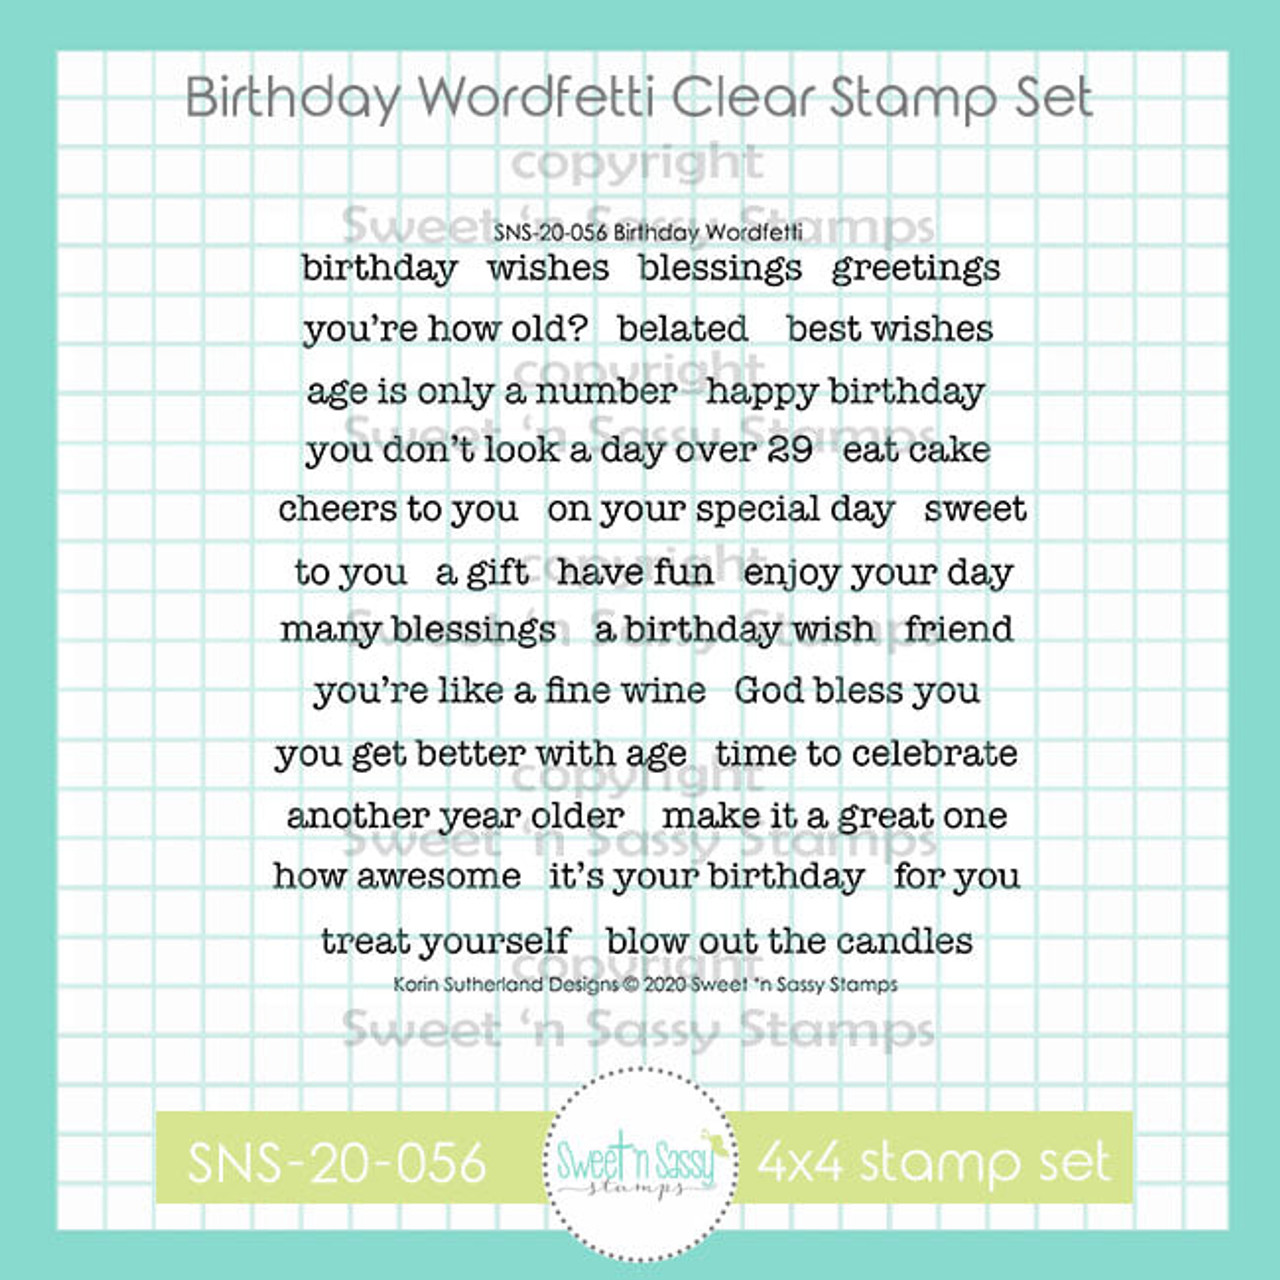 SnSS Birthday Wordfetti Stamp Set